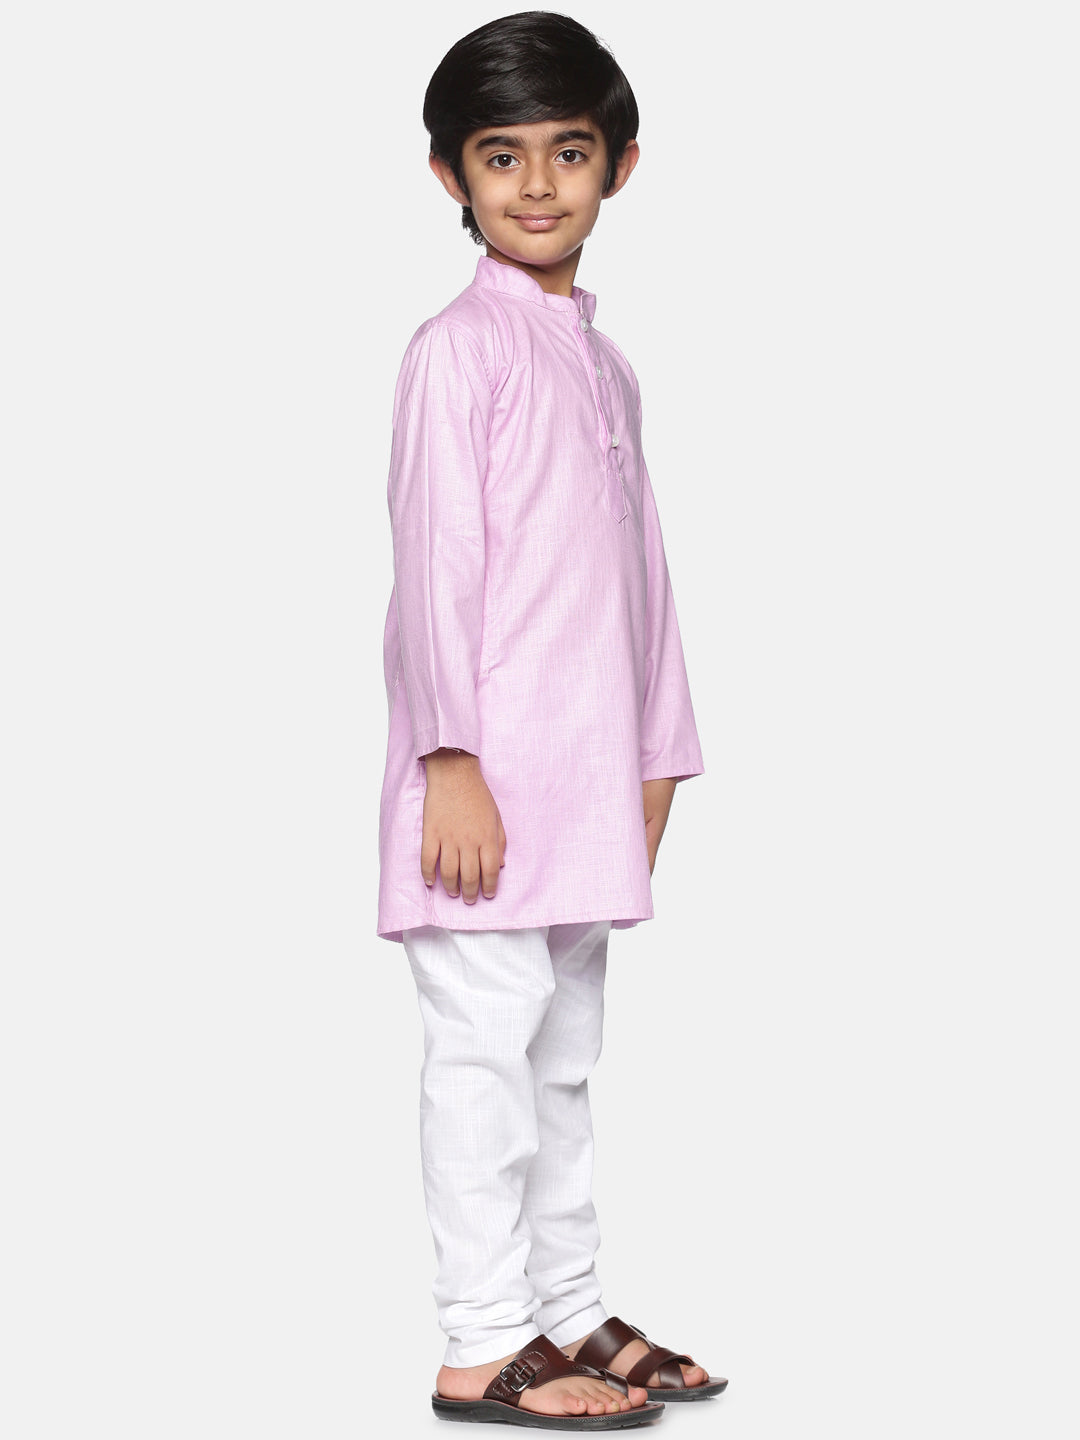 Boys Pink Colour Cotton Kurta Pyjama Set